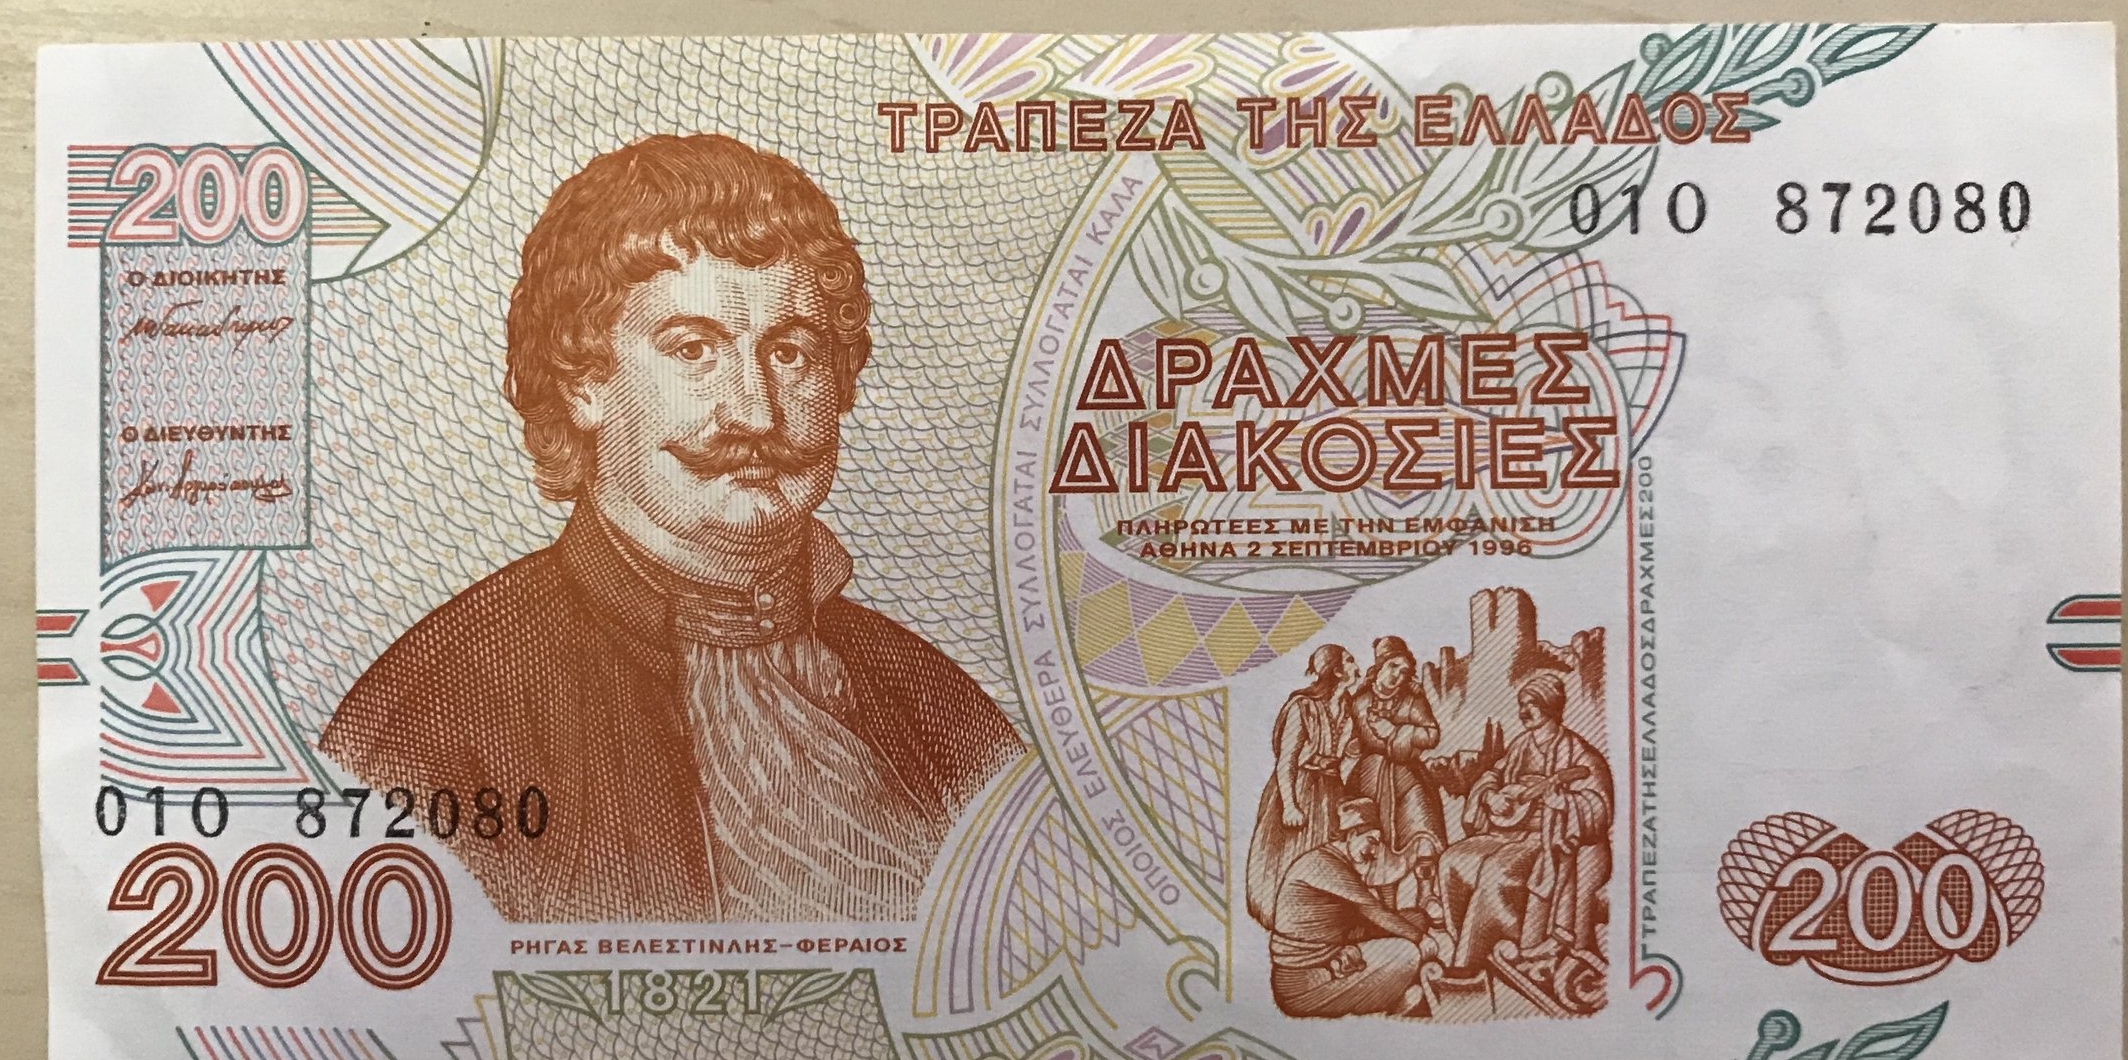 Pre-Euro drachma note from 1998